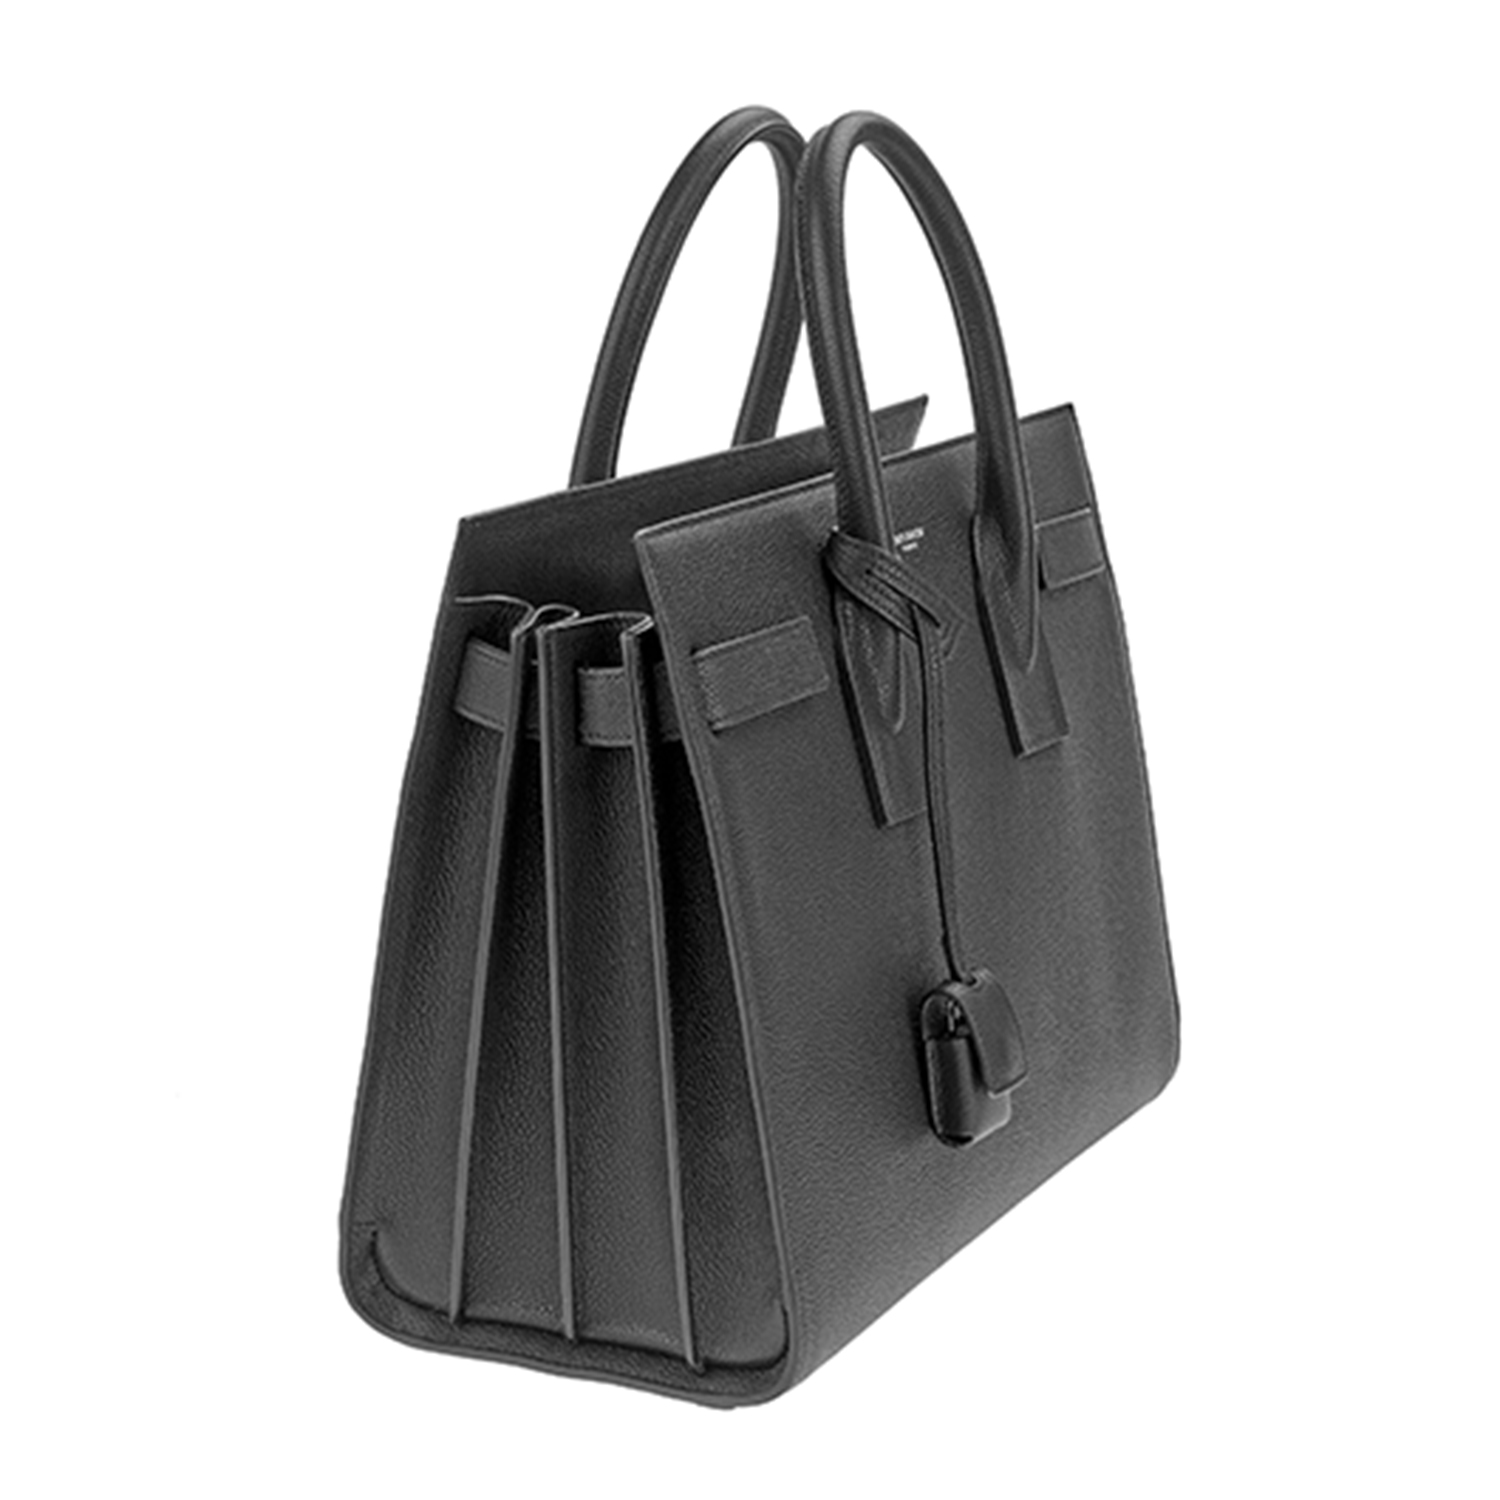 Handbag for rent Yves Saint Laurent - Rent Fashion Bag